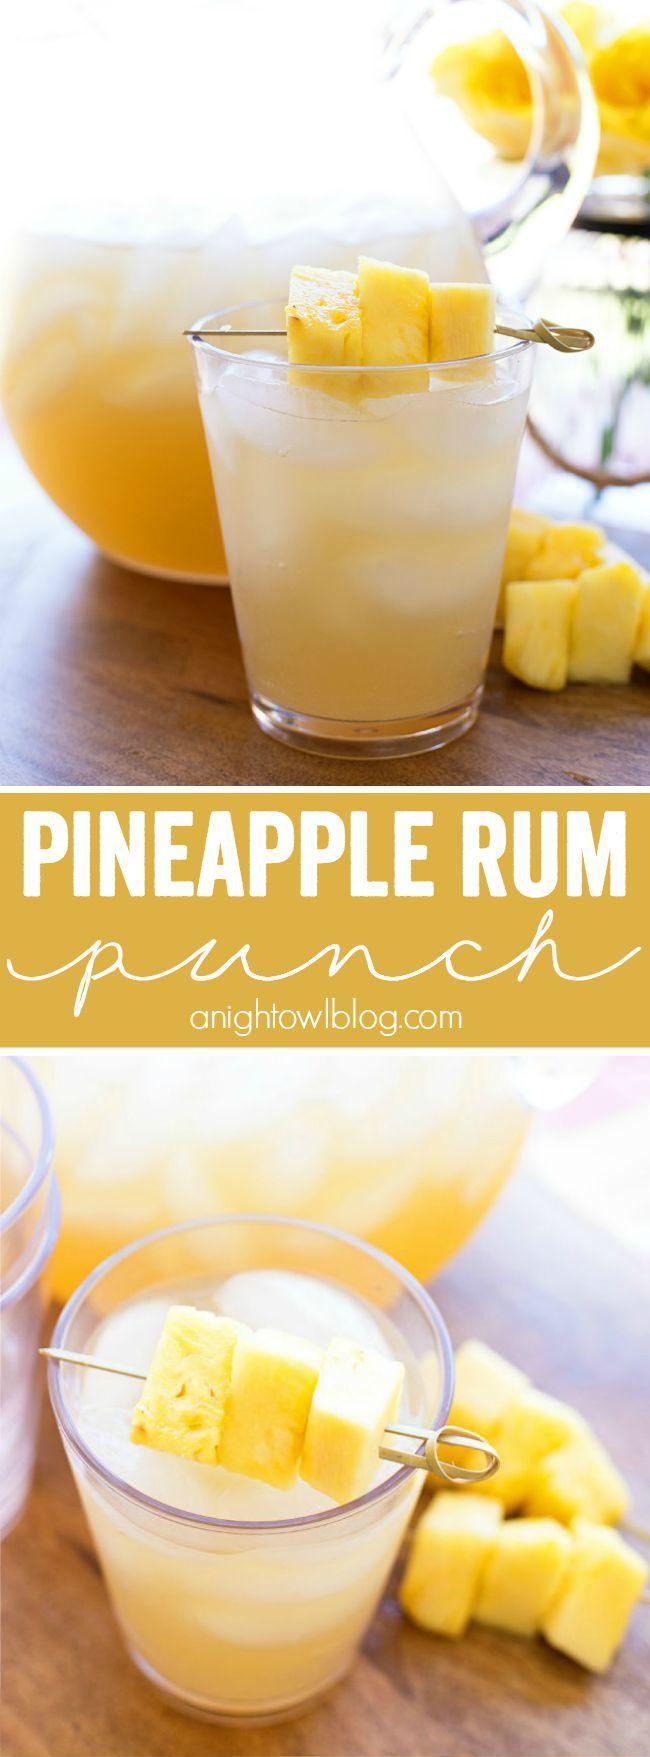 Wedding - Pineapple Rum Punch